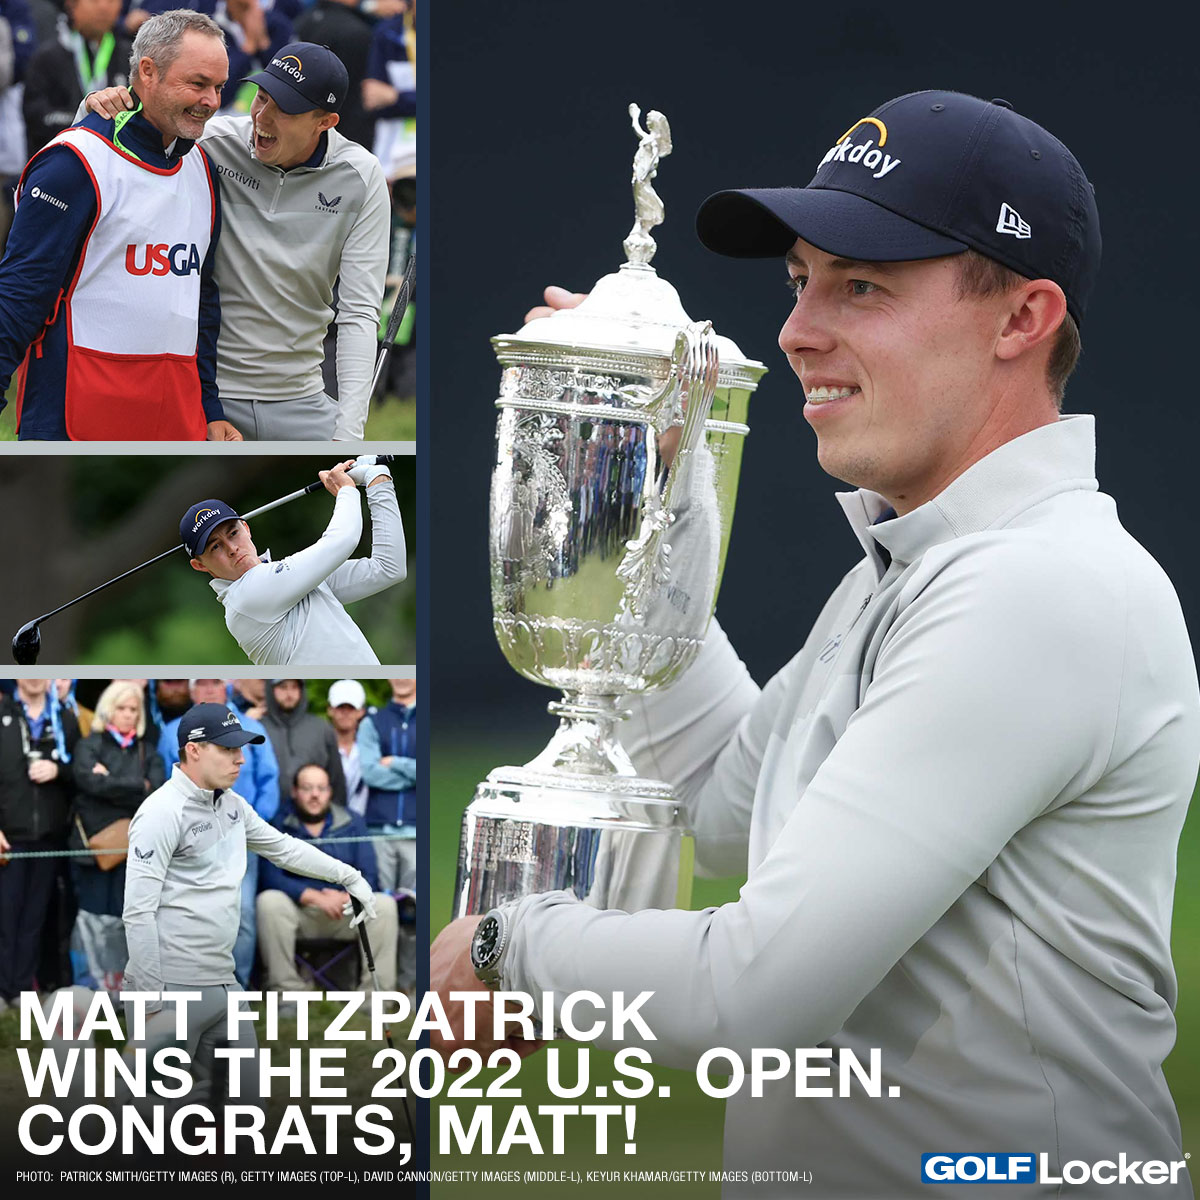 Matt Fitzpatrick Wins the 2022 U.S. Open - Congrats, Matt!